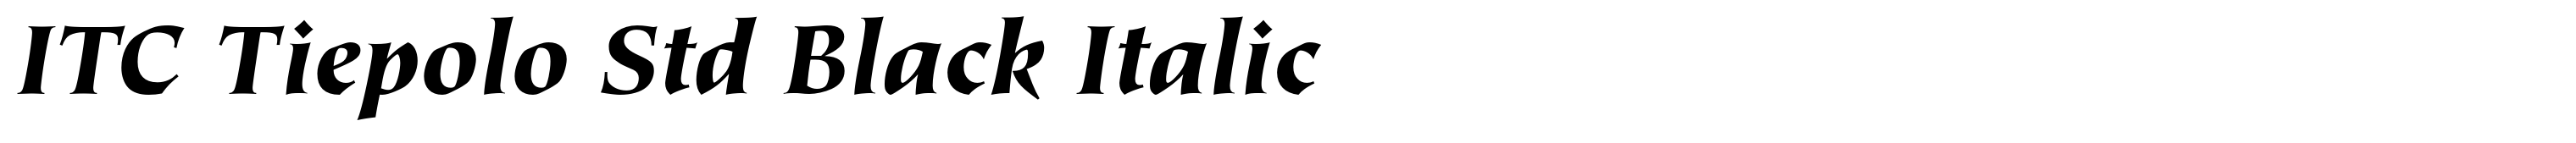 ITC Tiepolo Std Black Italic